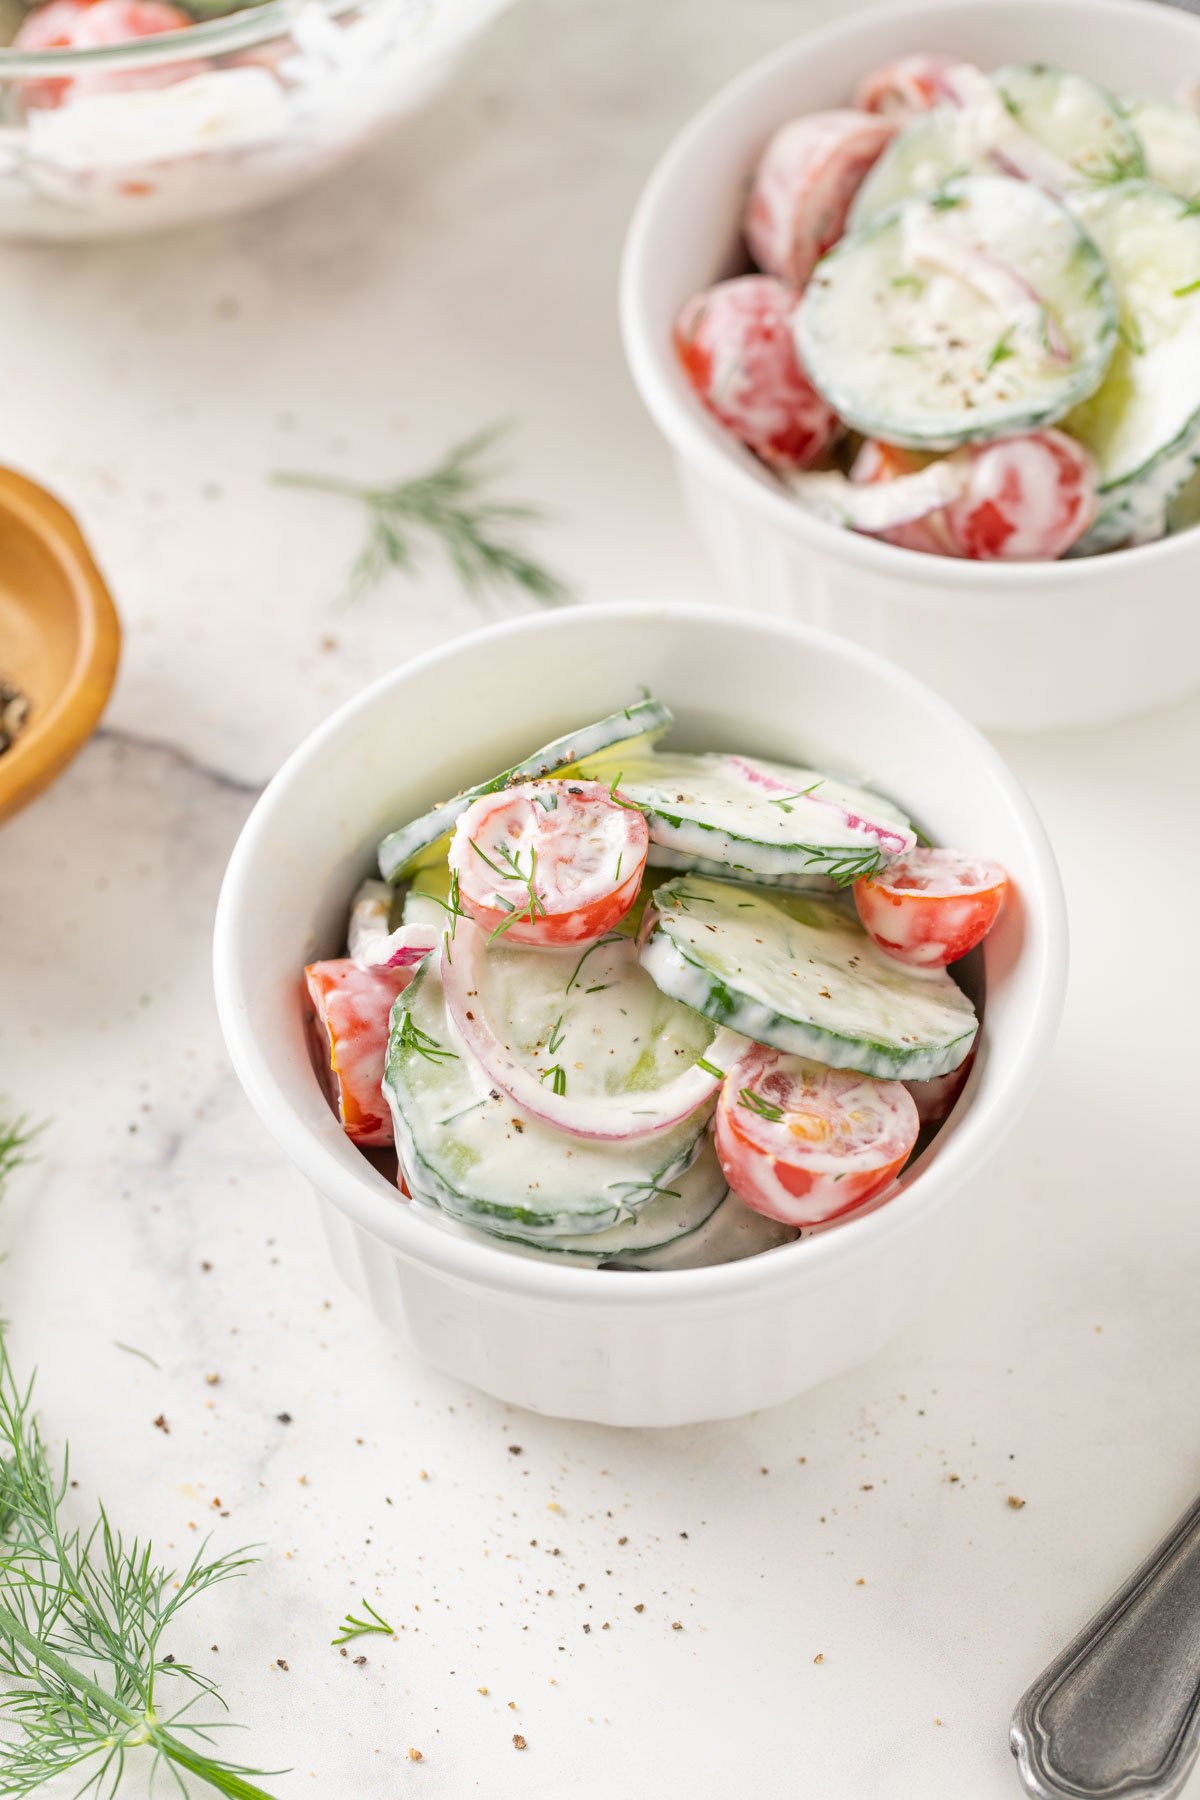 Creamy cucumber and tomato salad with onion in a white ramekin.  